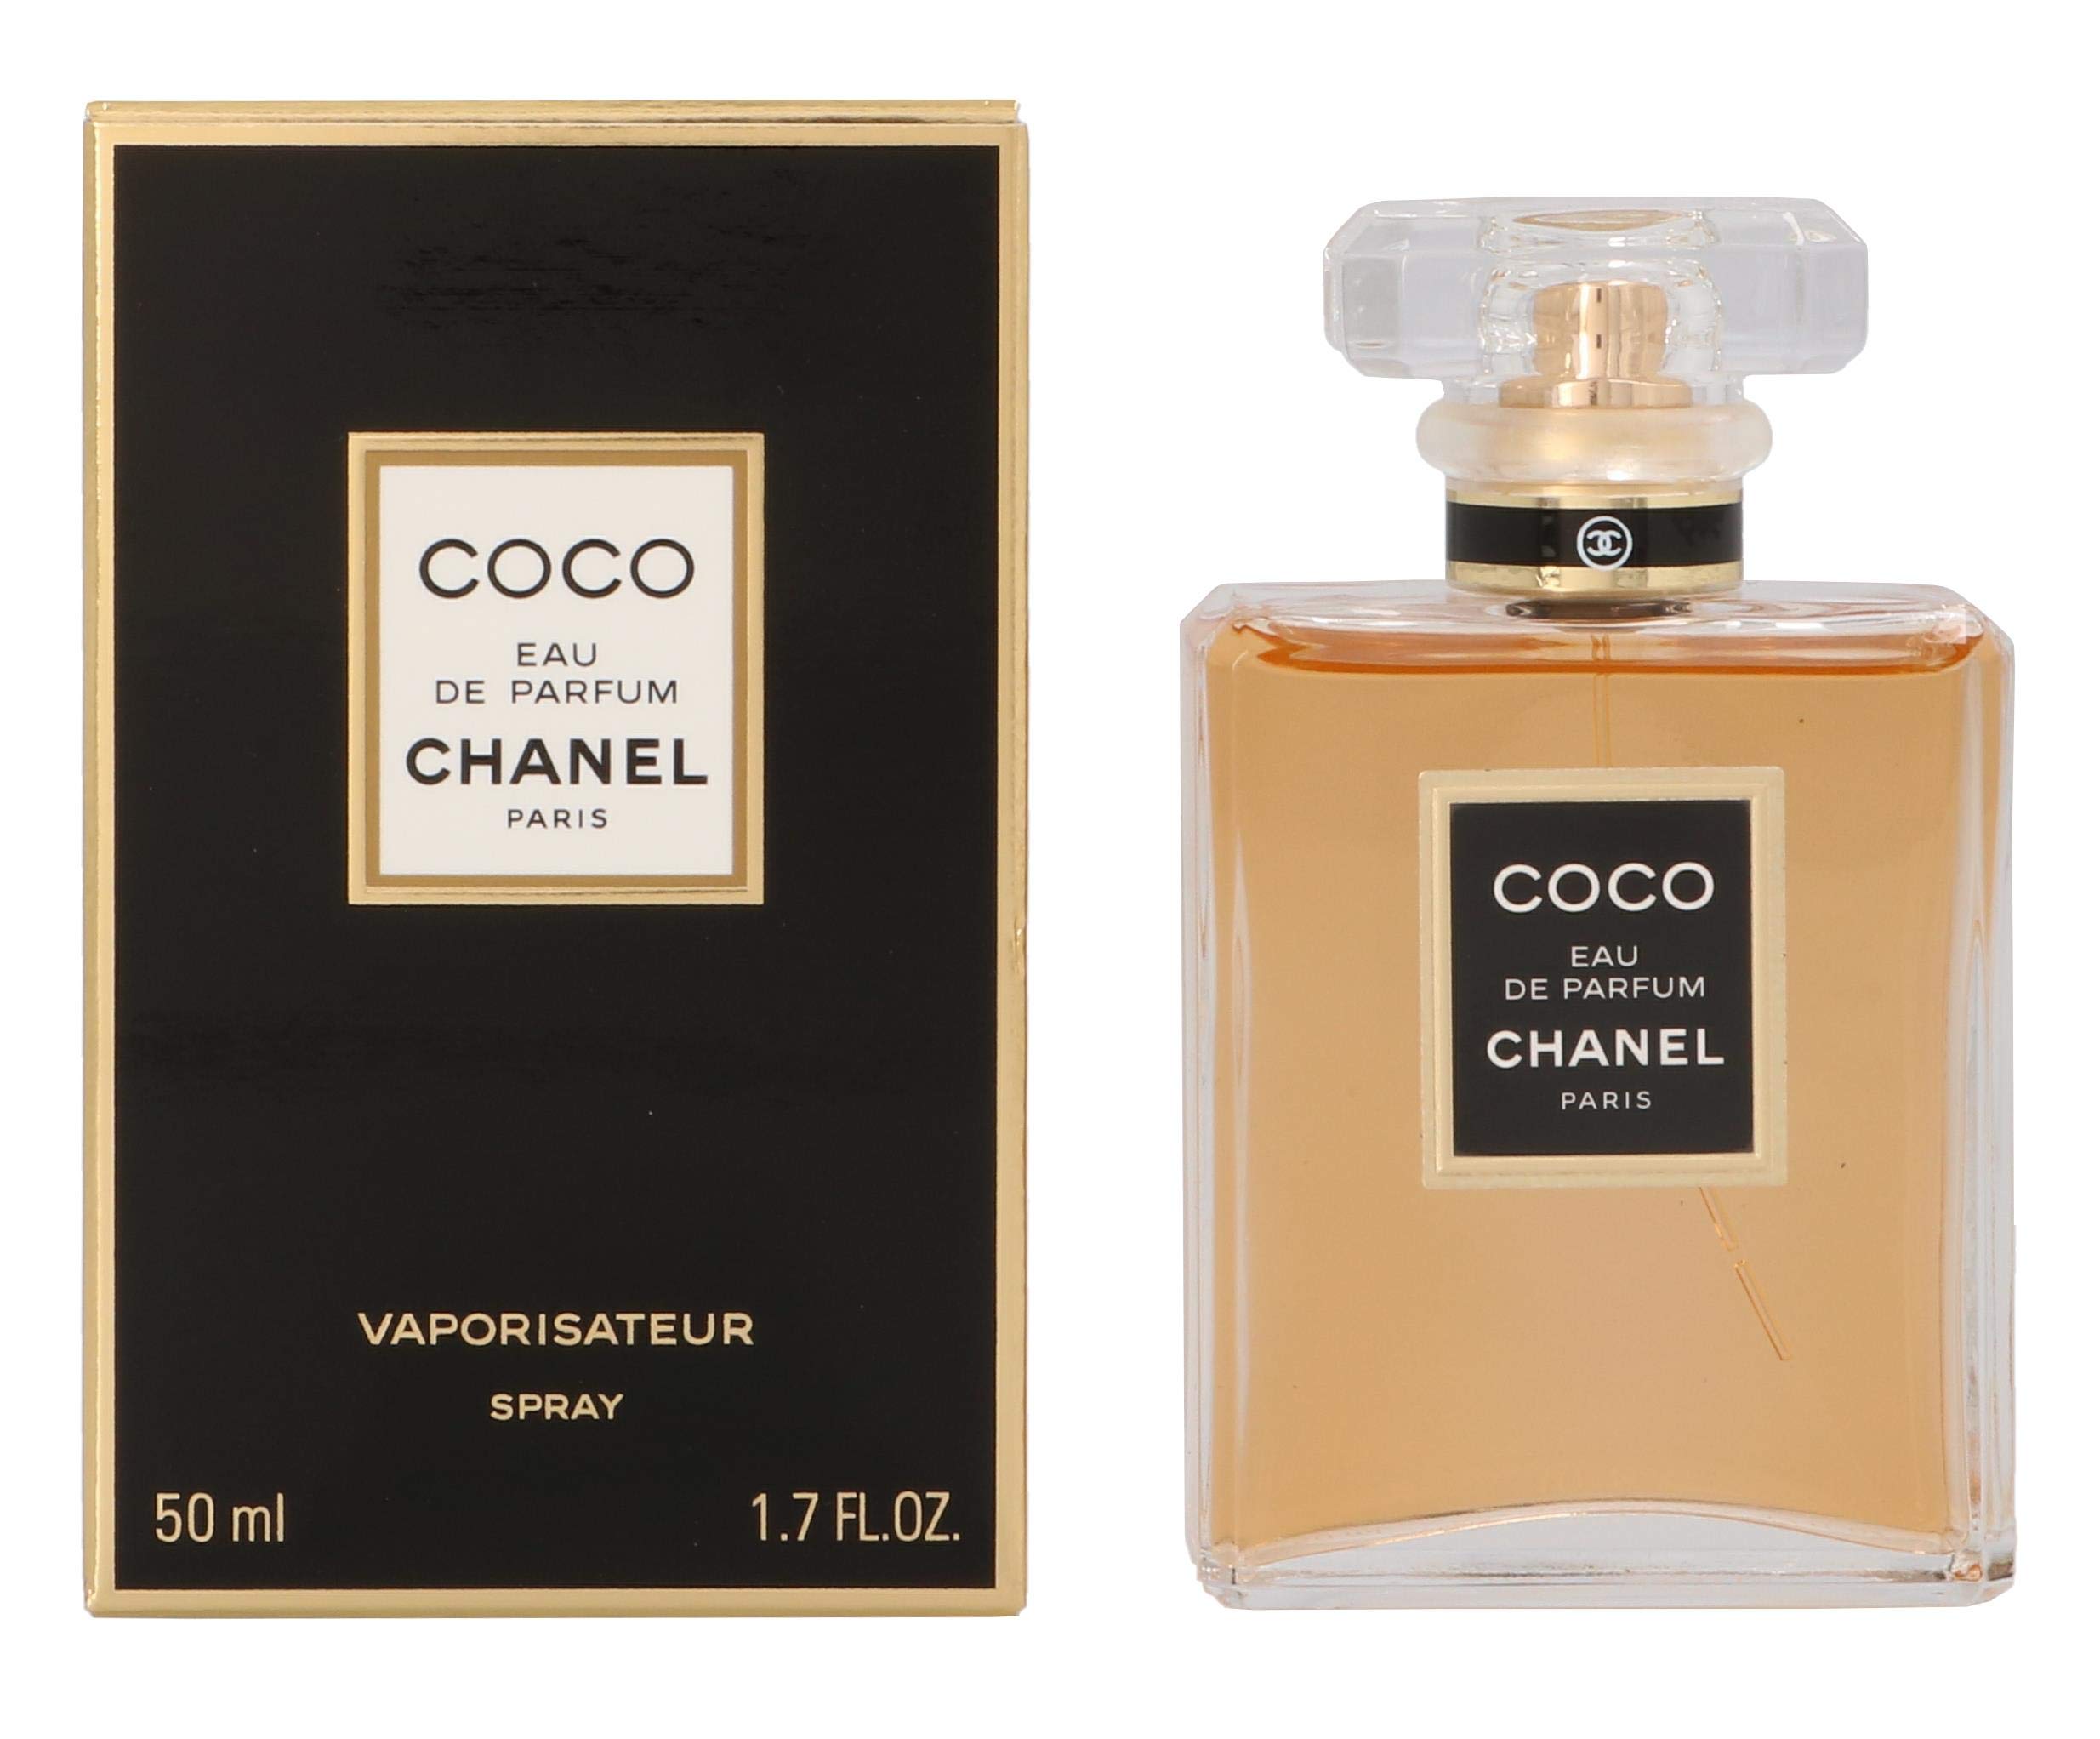 Nước hoa Chanel Coco Mademoiselle Eau de Parfum  RS Nguyen  Luxury Brand  Luxurious Life